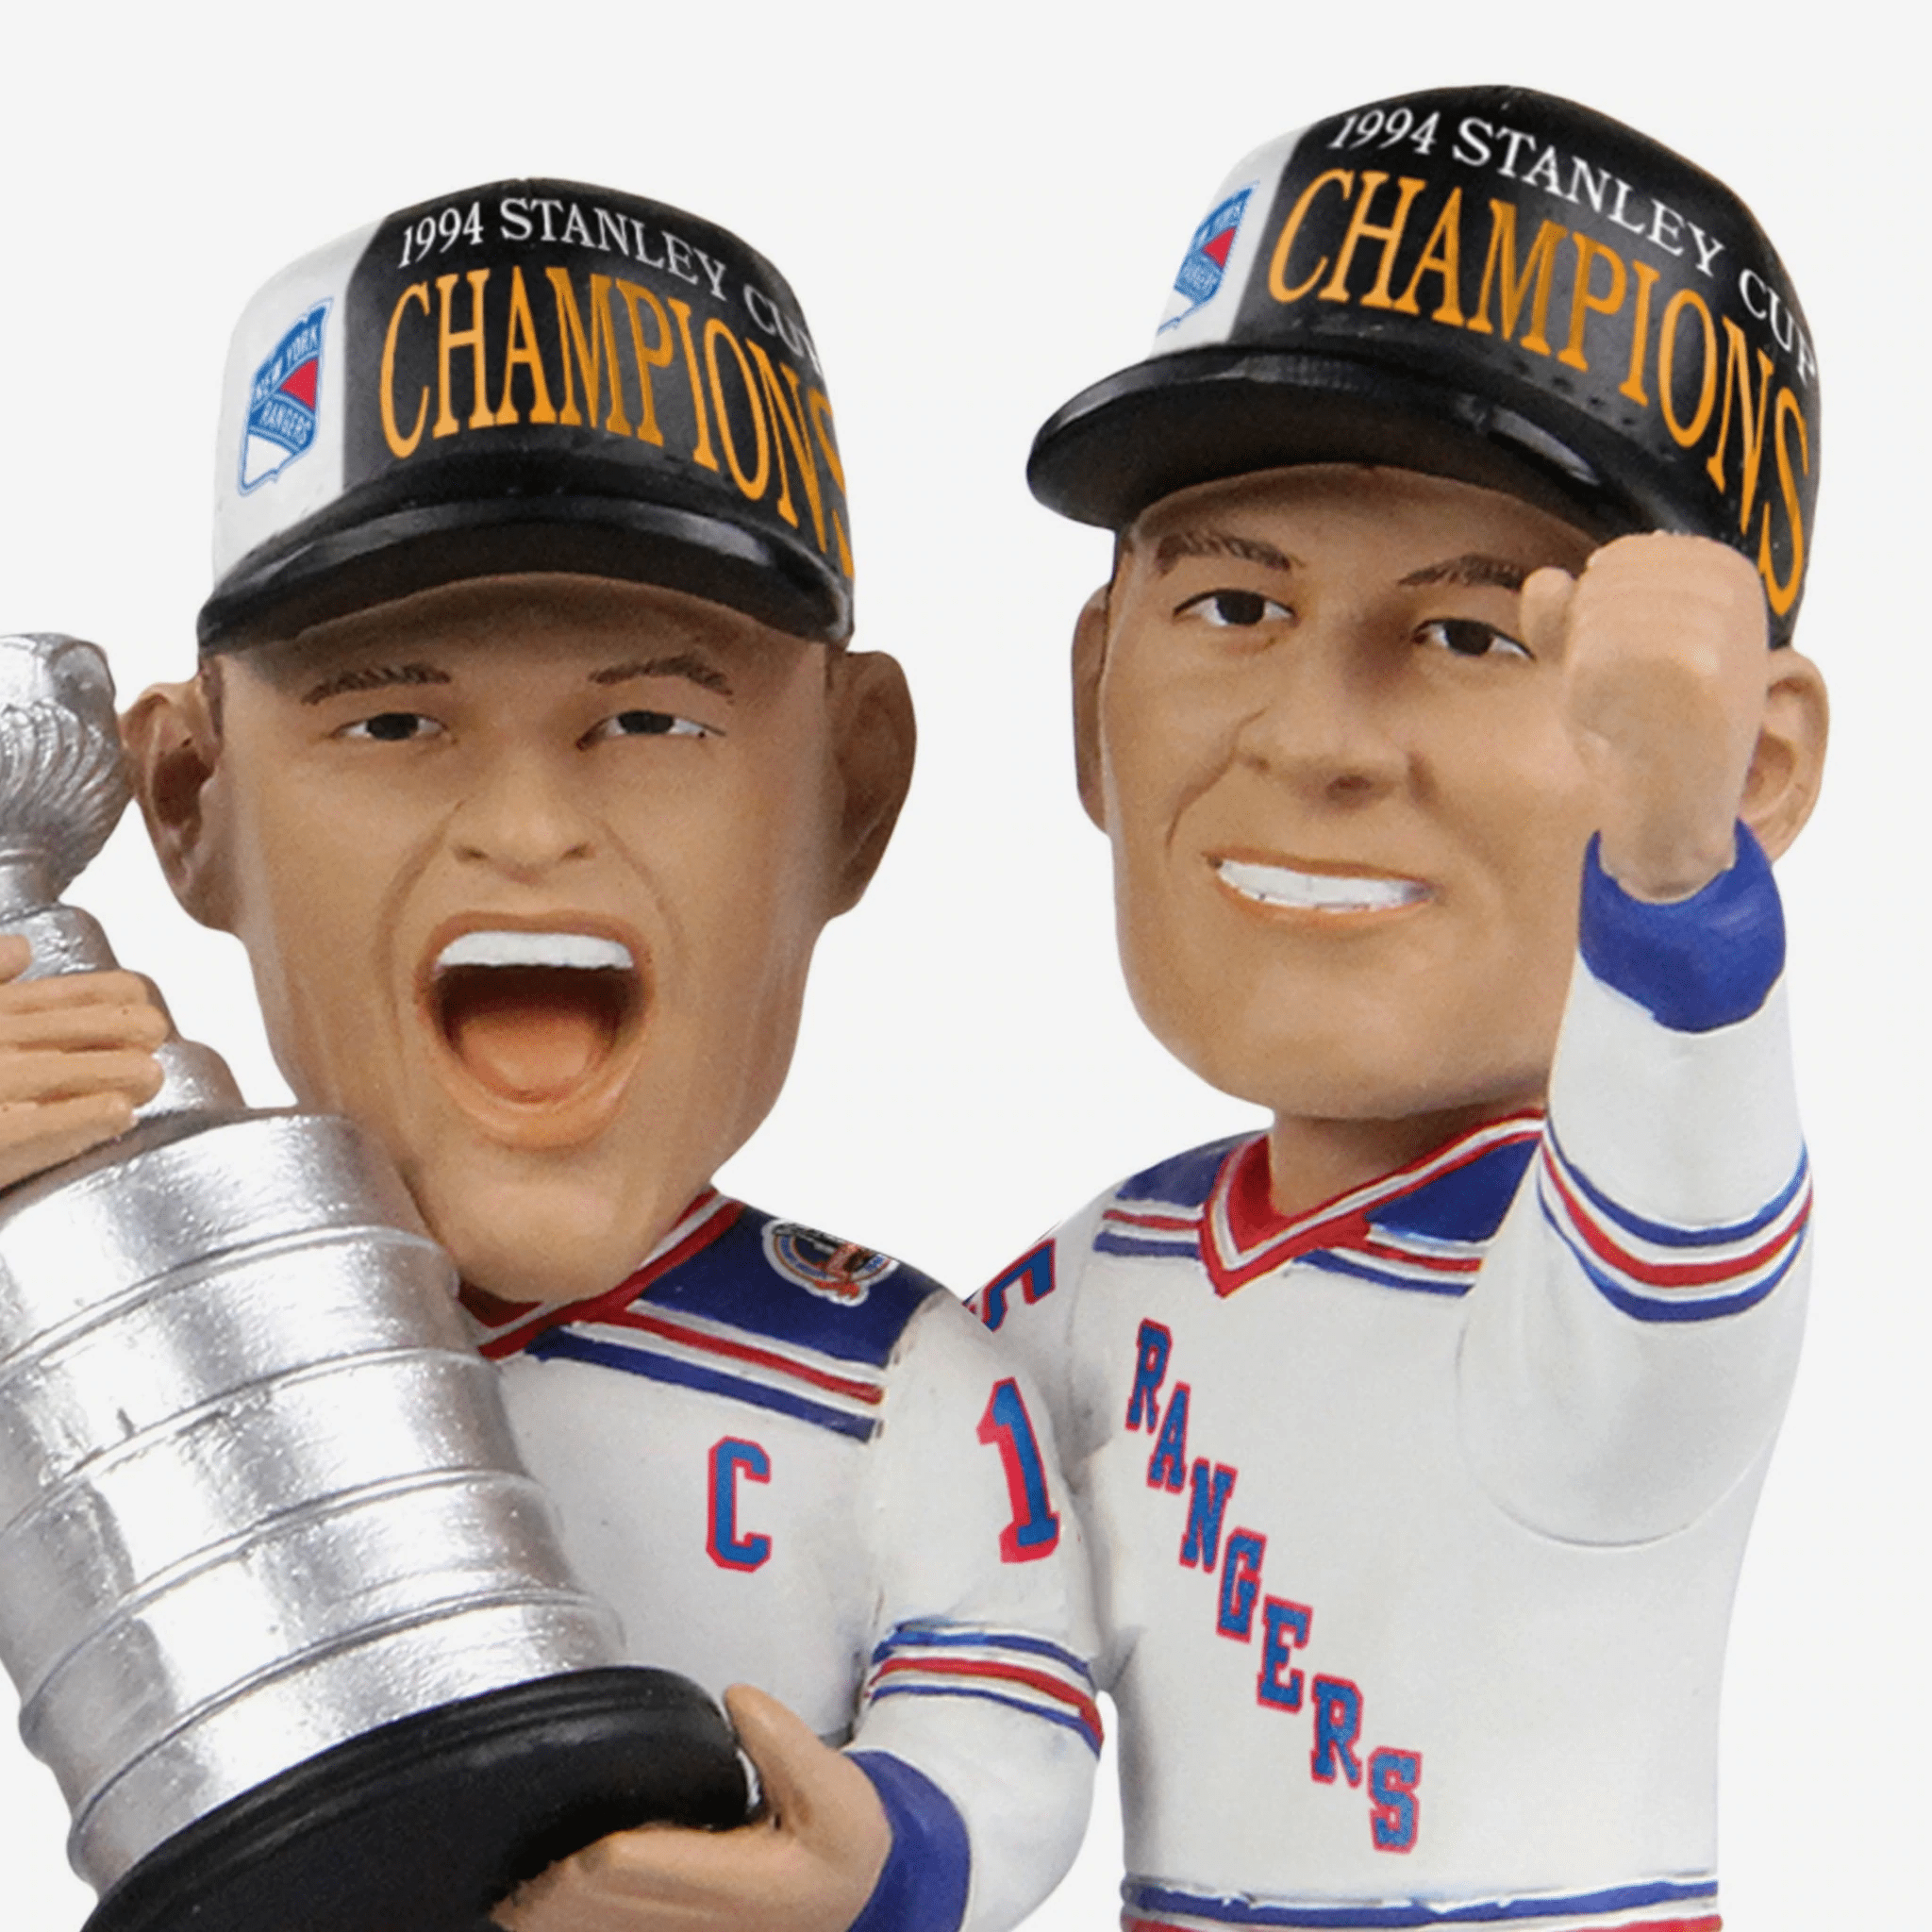 New York Rangers 1994 Stanley Cup Champions Mini Bobblehead